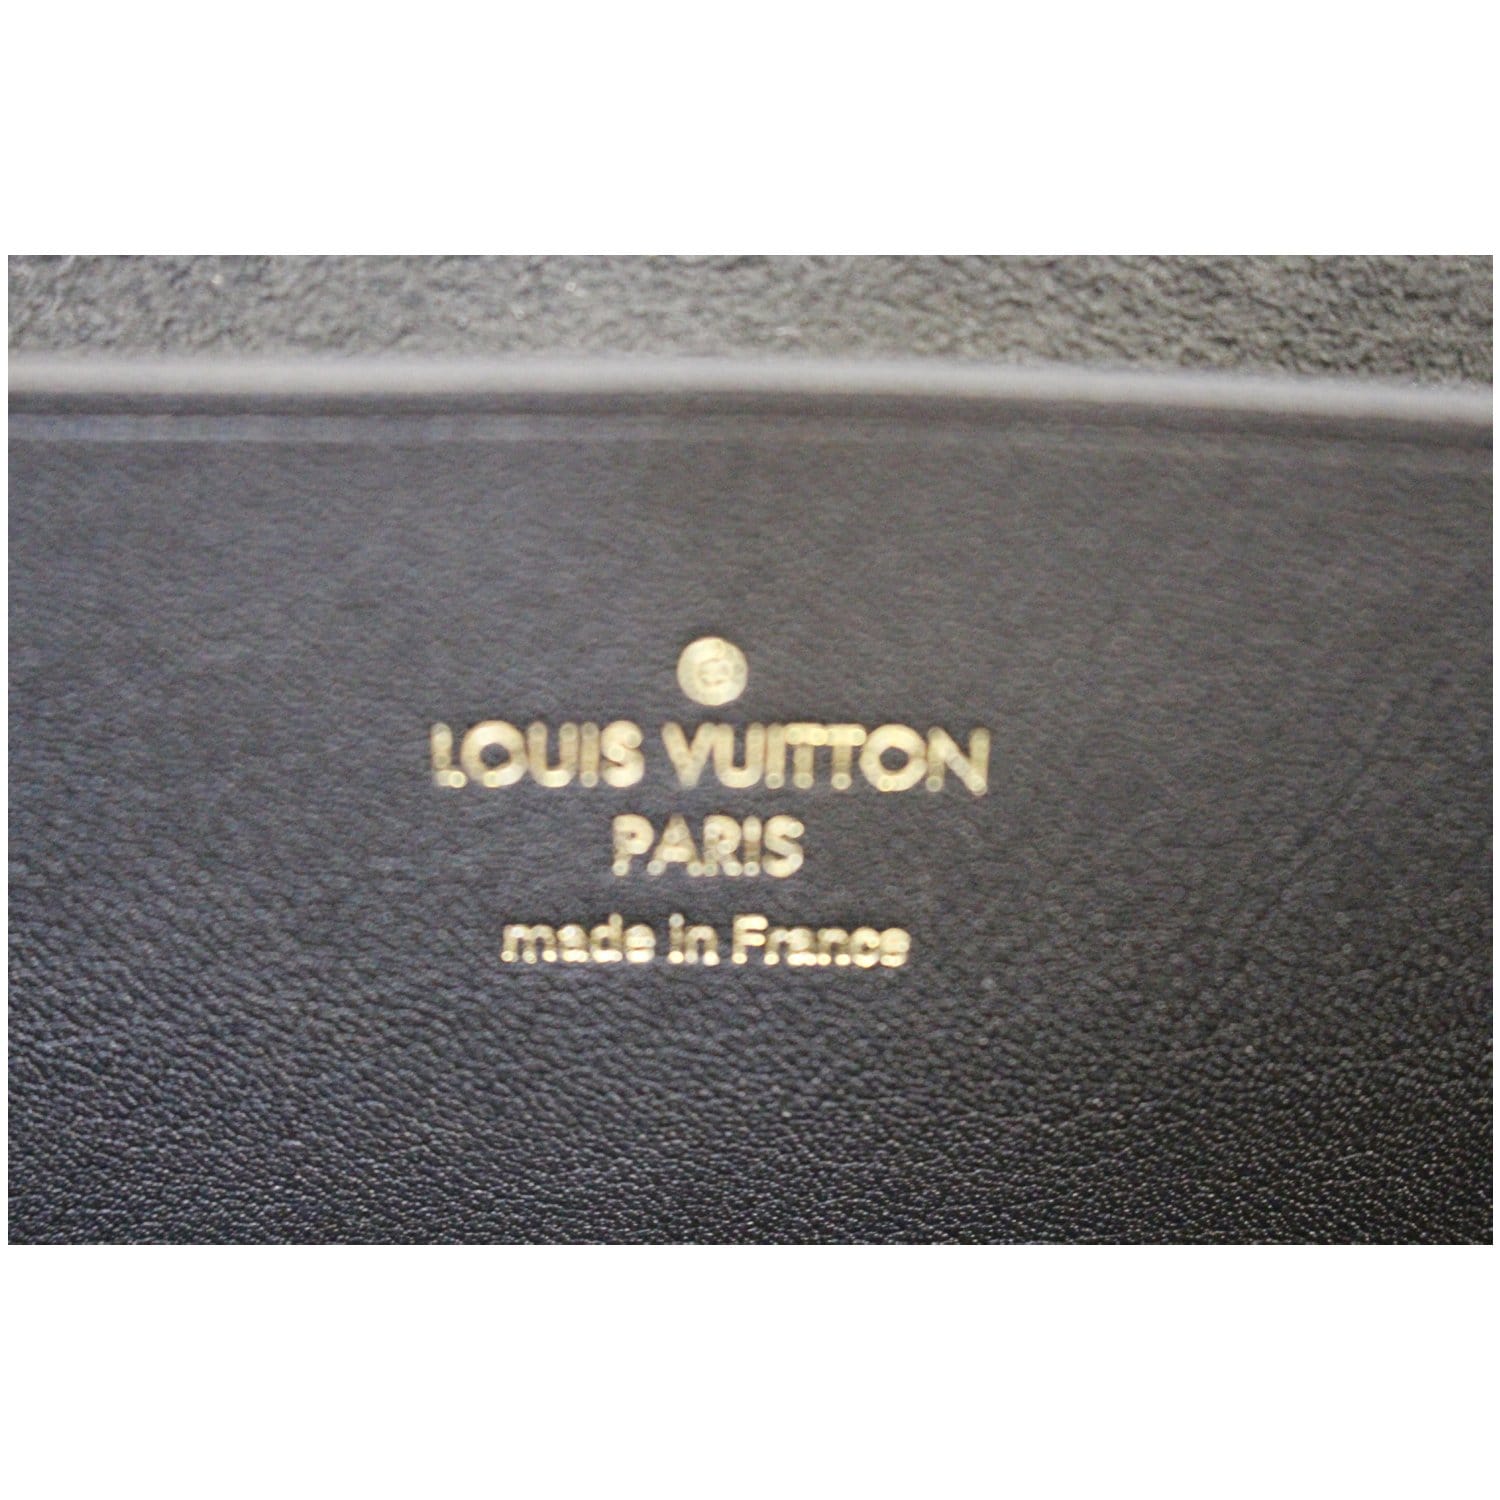 LOUIS VUITTON LOVE NOTE CALFSKIN LEATHER SHOULDER BAG BLACK (TT3265) 